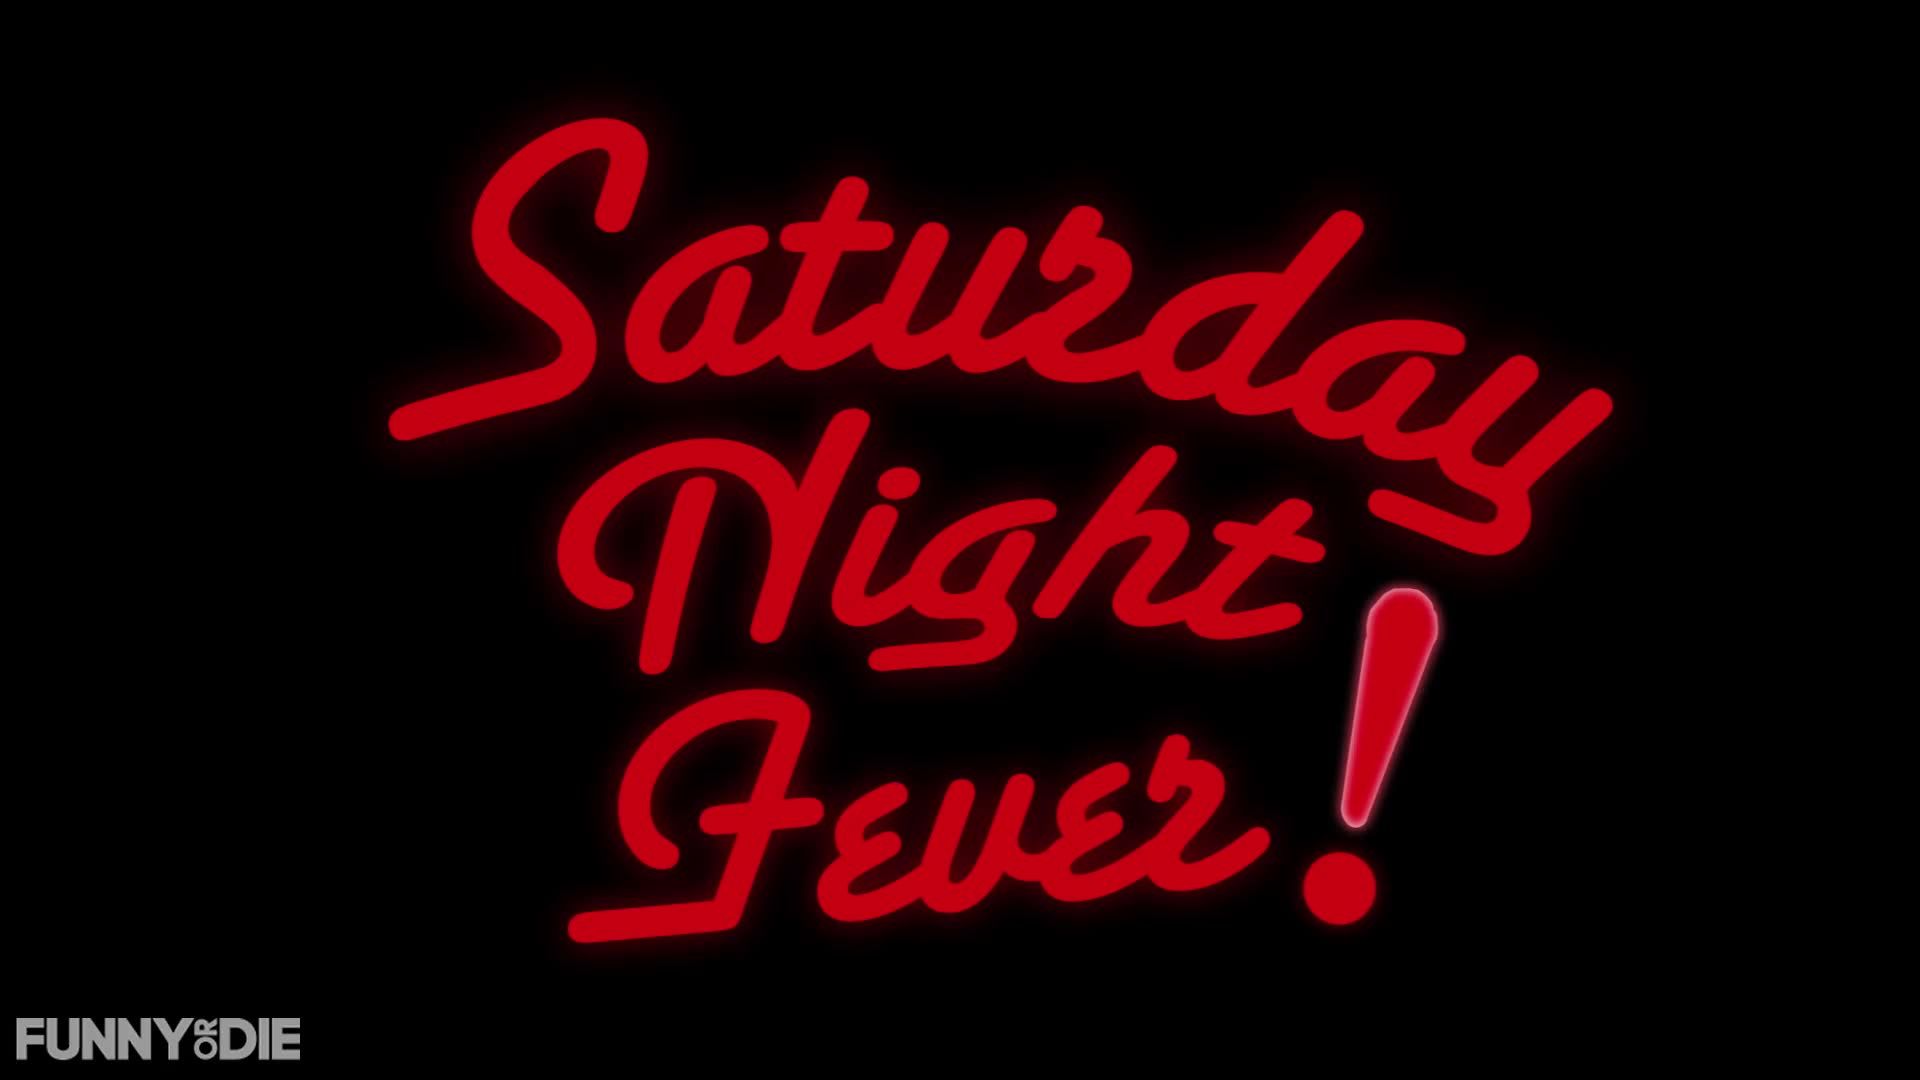 Saturday Night Fever Wallpaper Free Saturday Night Fever Background